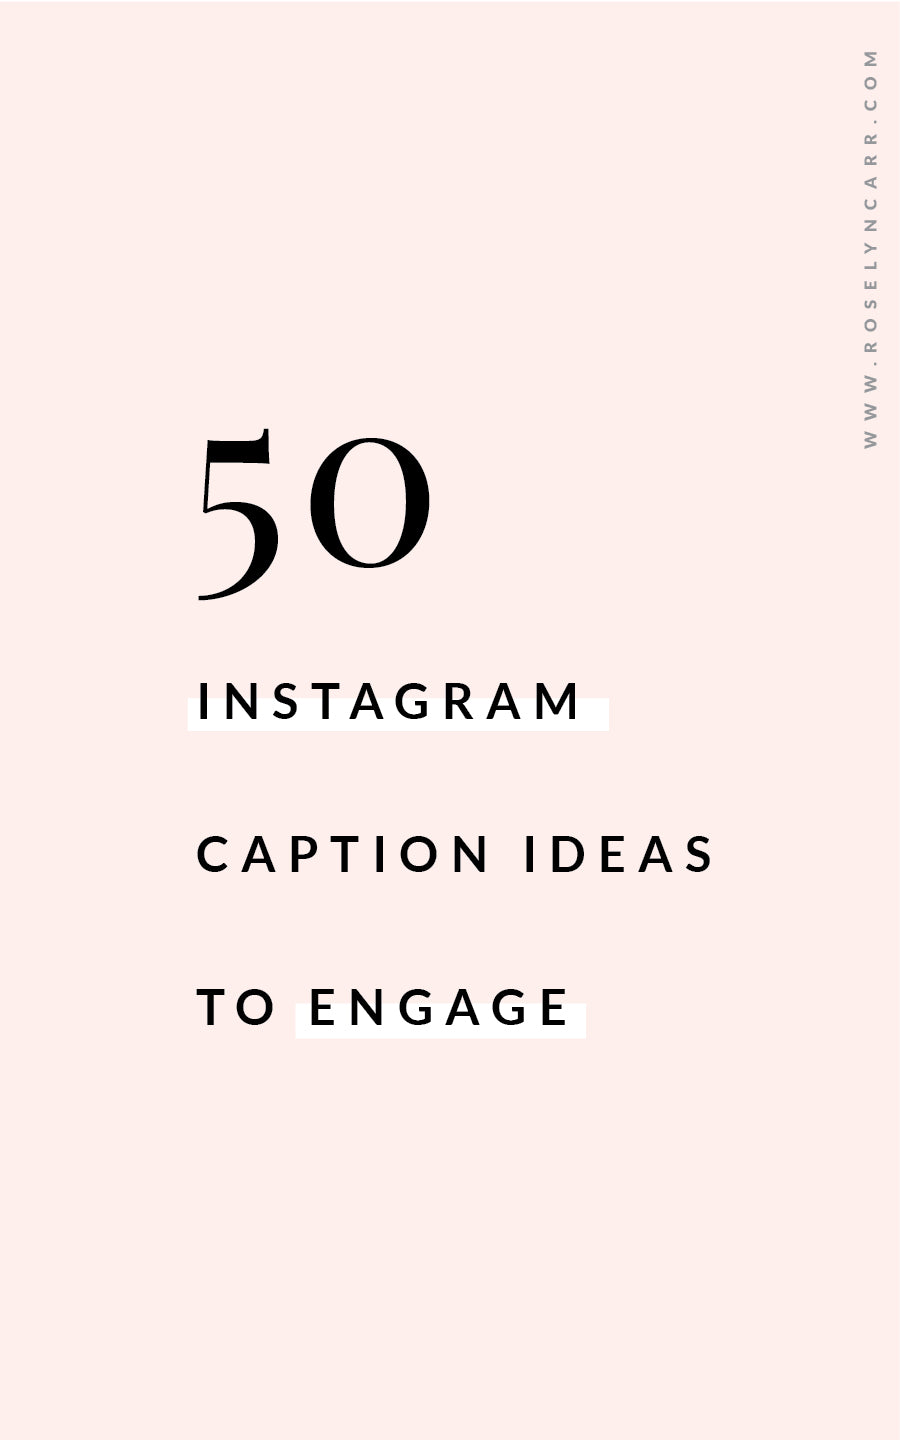 50 days of Instagram captions that engage – Birdesign